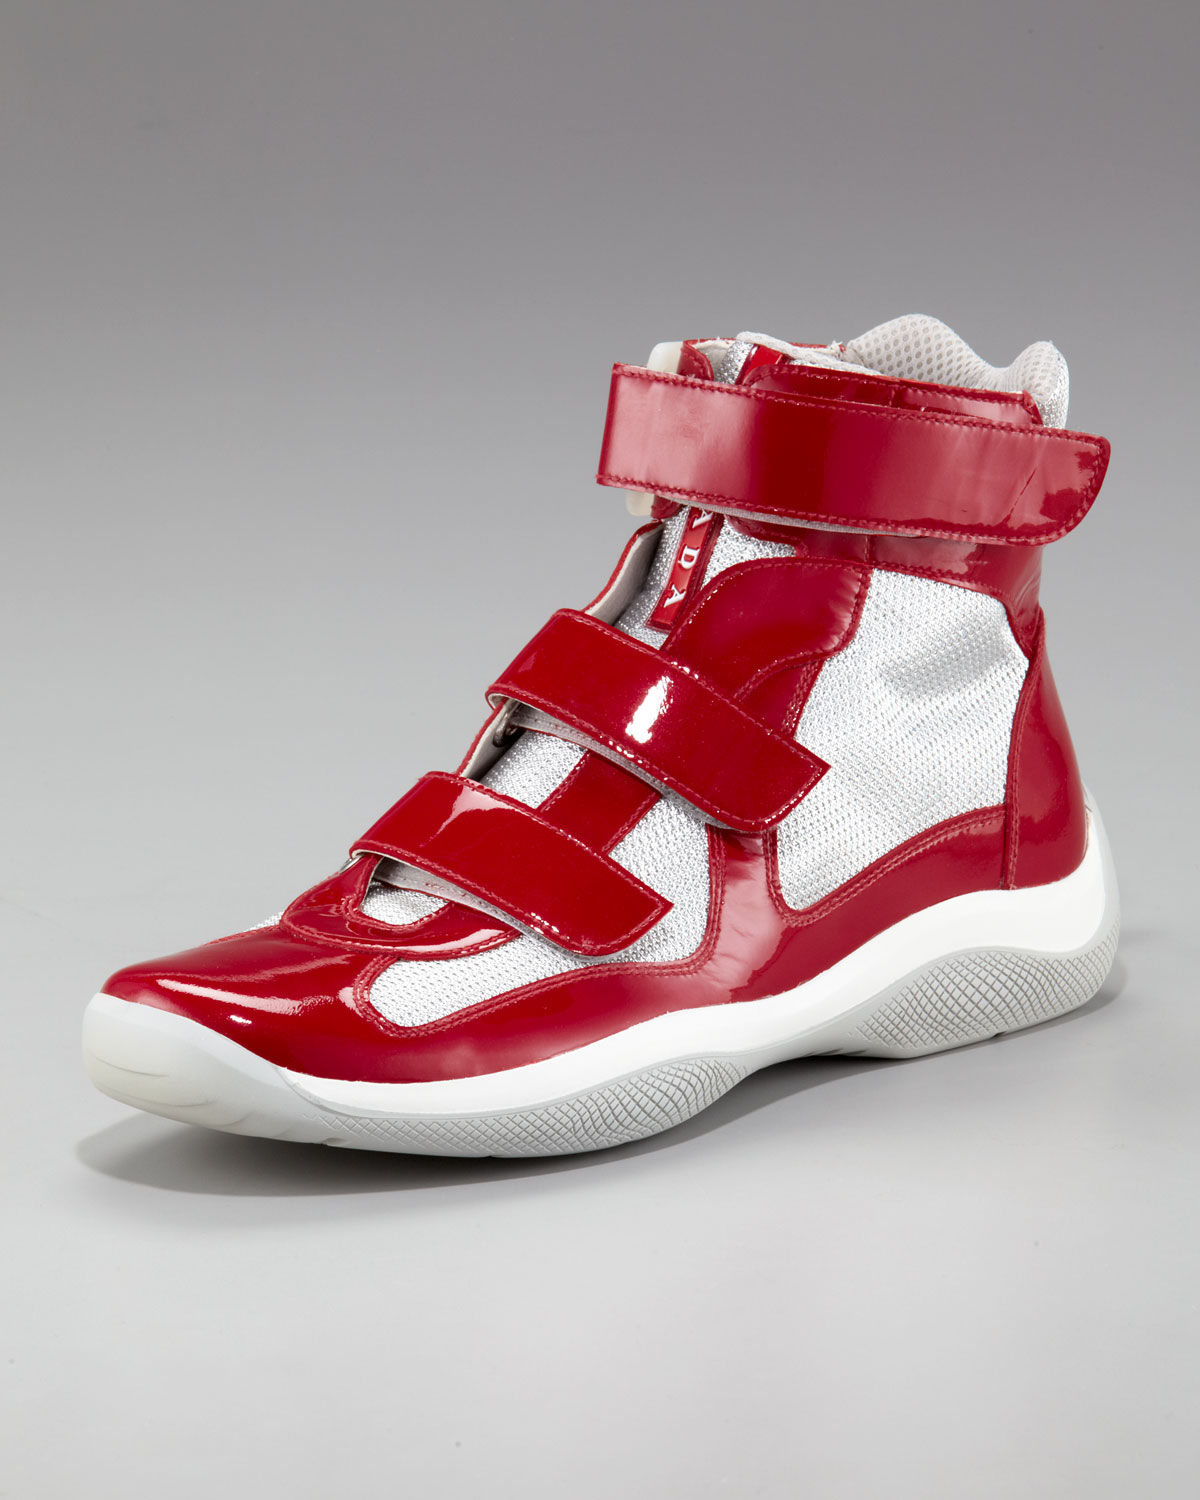 Lyst - Prada Grip-strap High-top Sneaker in Red for Men